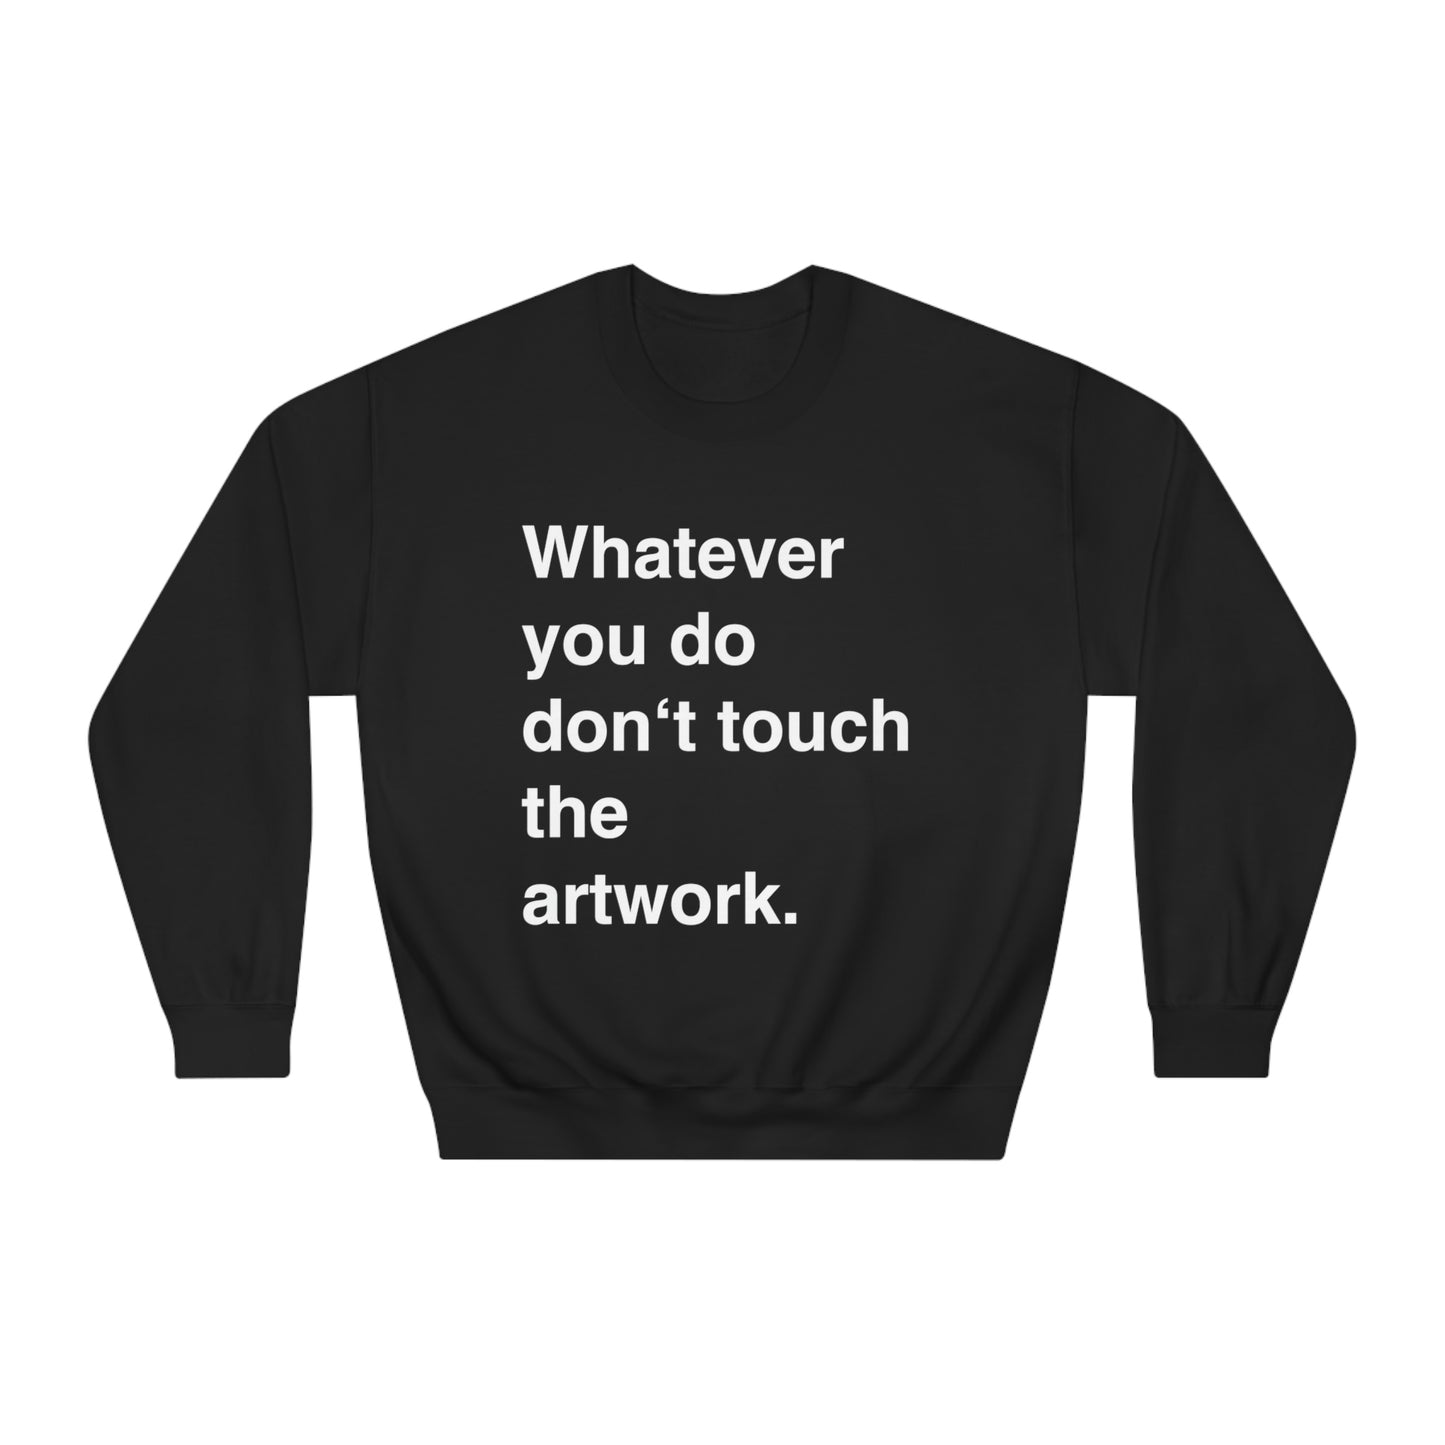 Don’t Touch the Artwork. Unisex DryBlend® Crewneck Sweatshirt